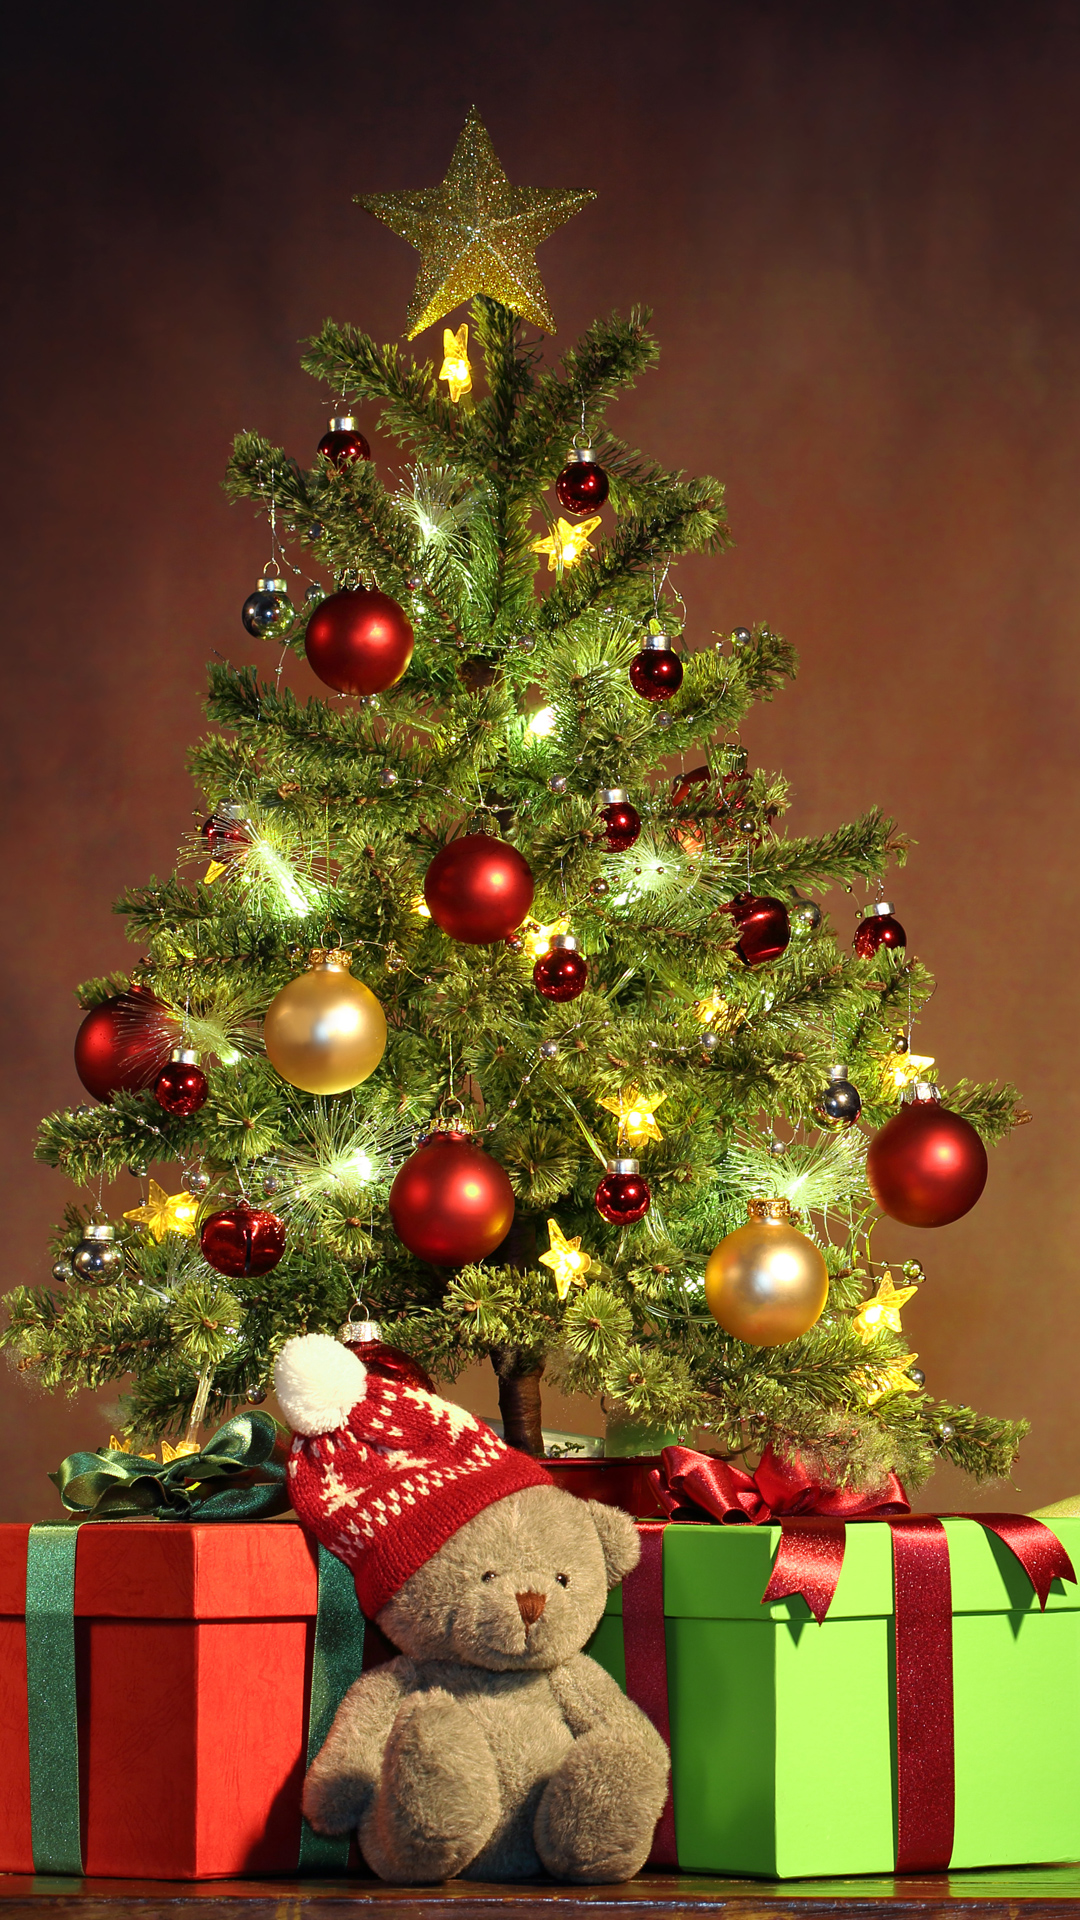 Christmas Tree iPhone 6S Plus Wallpaper | Gallery ...